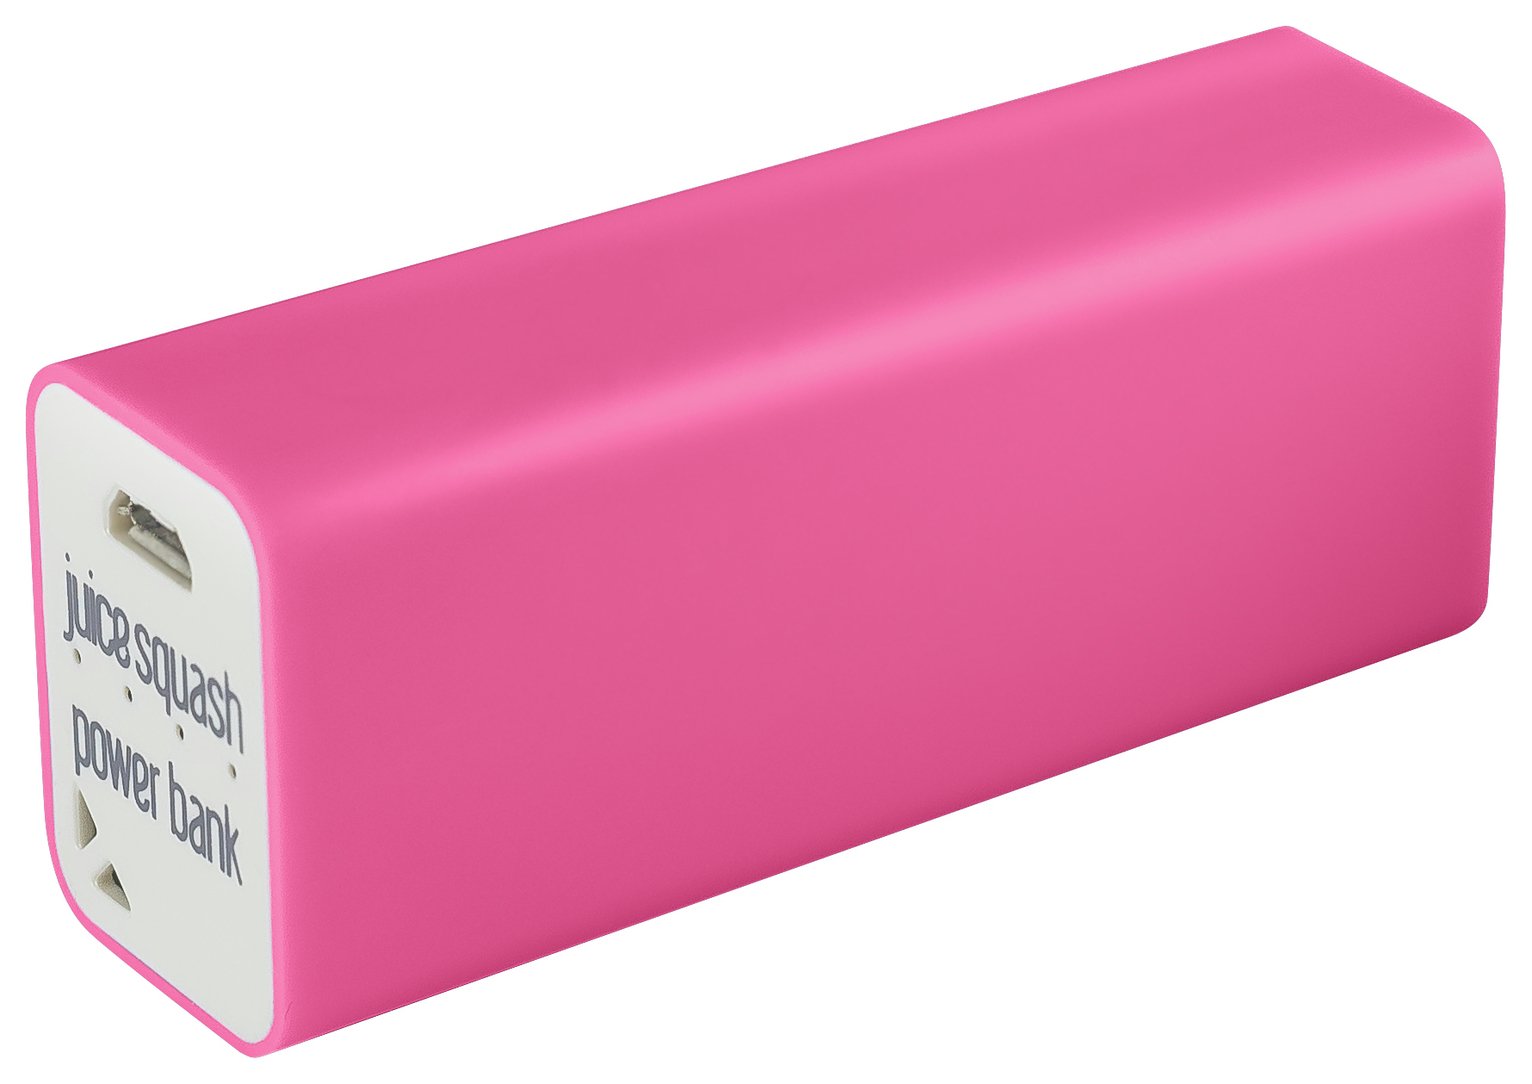 Juice Squash Mini Portable Power Bank - Pink